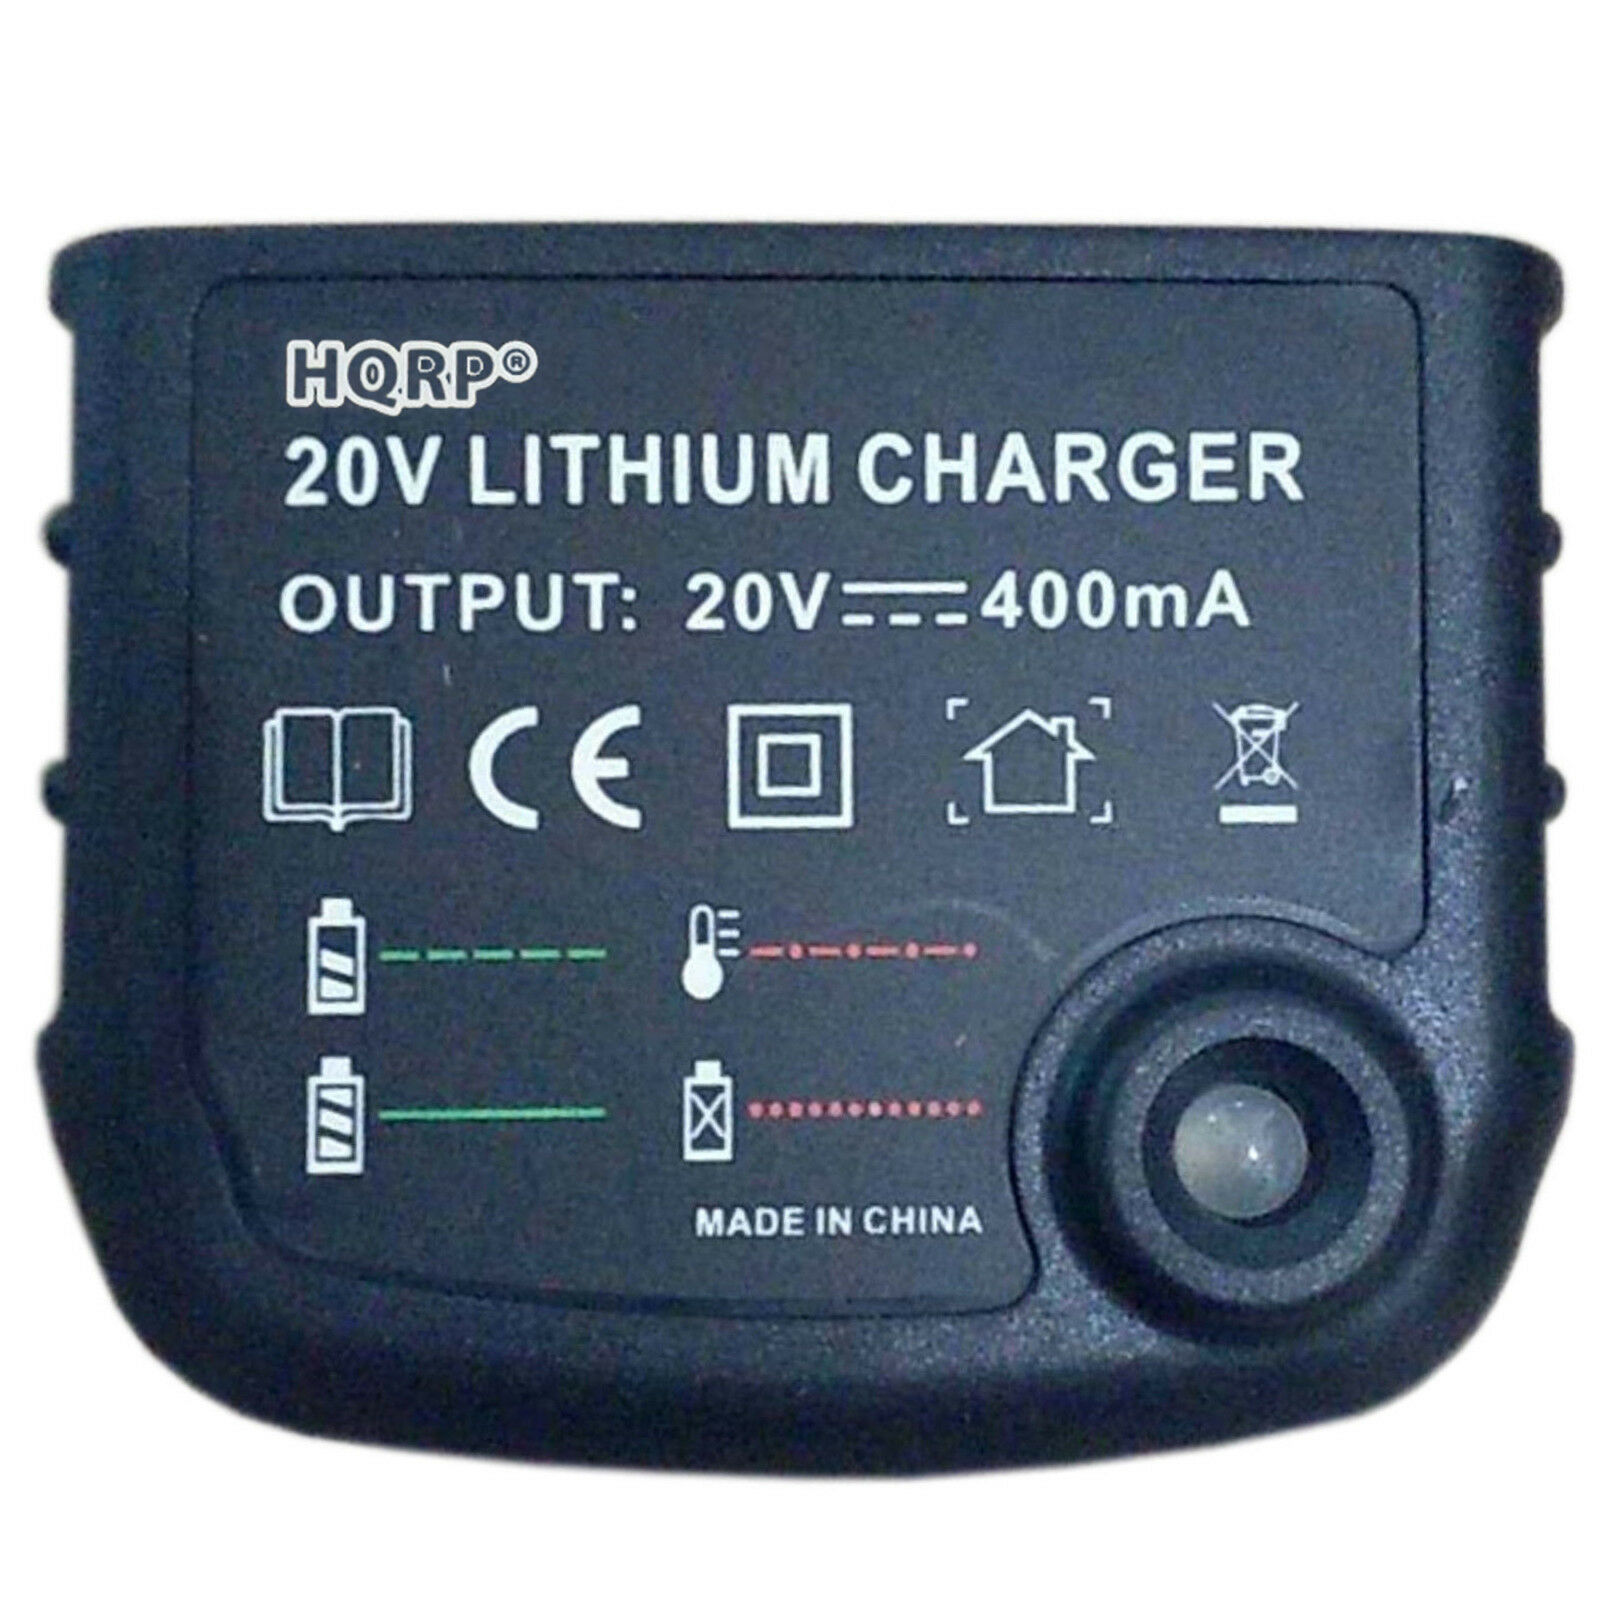 HQRP 20V Li-Ion Battery Charger fits Black and Decker BDCDE120C BDCDMT120  BDC120VA100 LD120CBF LD120VA Electric Drill 